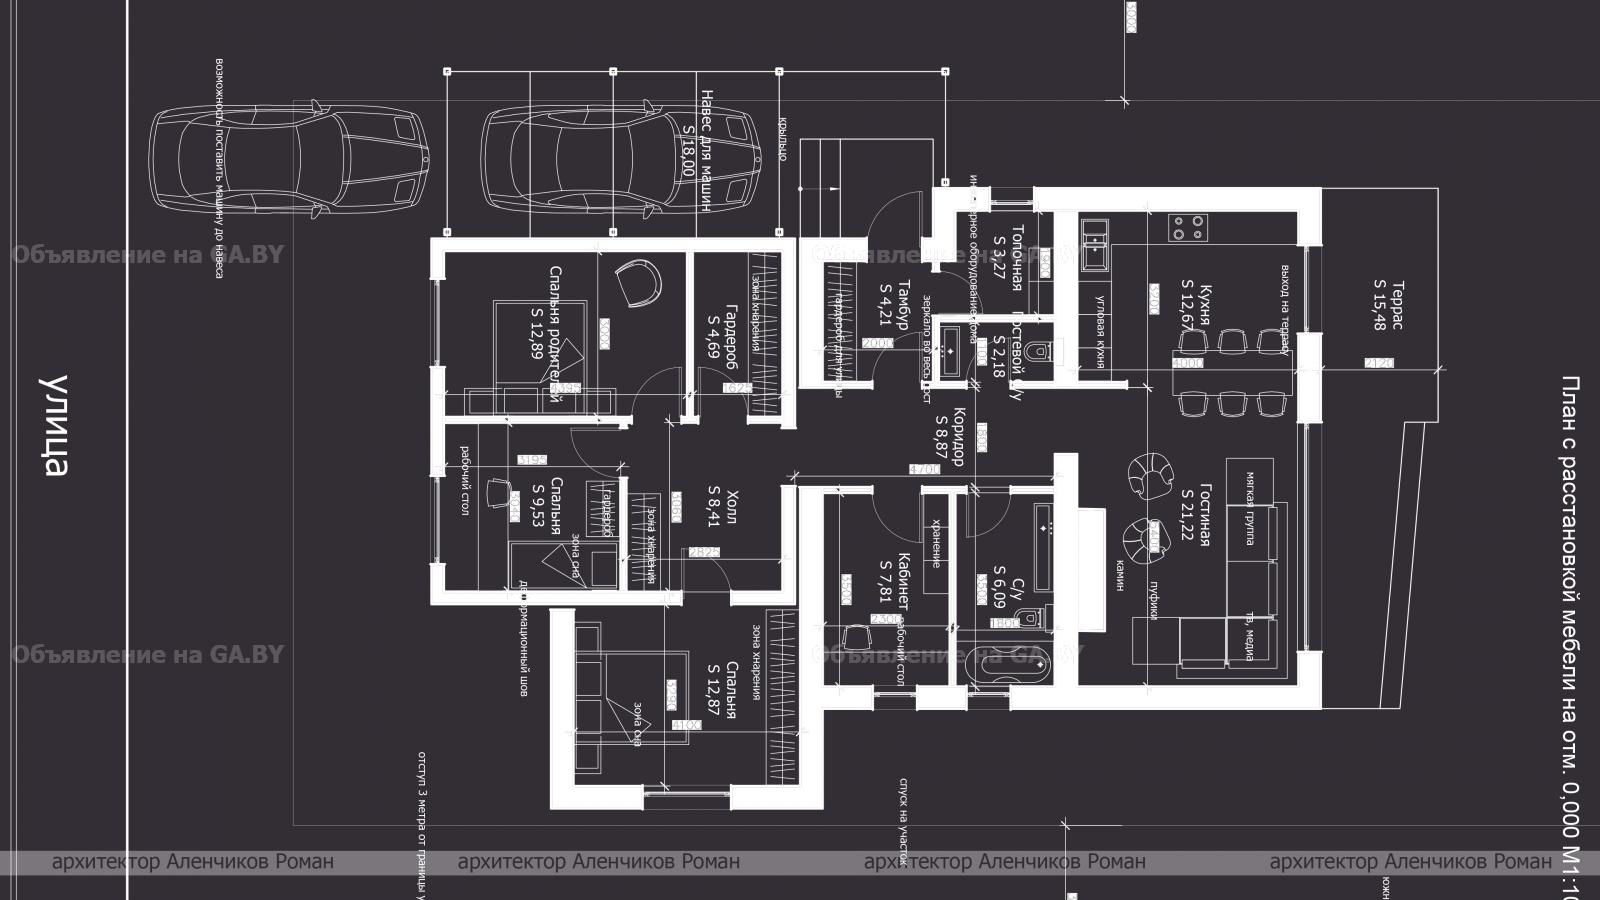 Выполню Архитектор, проект дома из сруба 6х6 - GA.BY